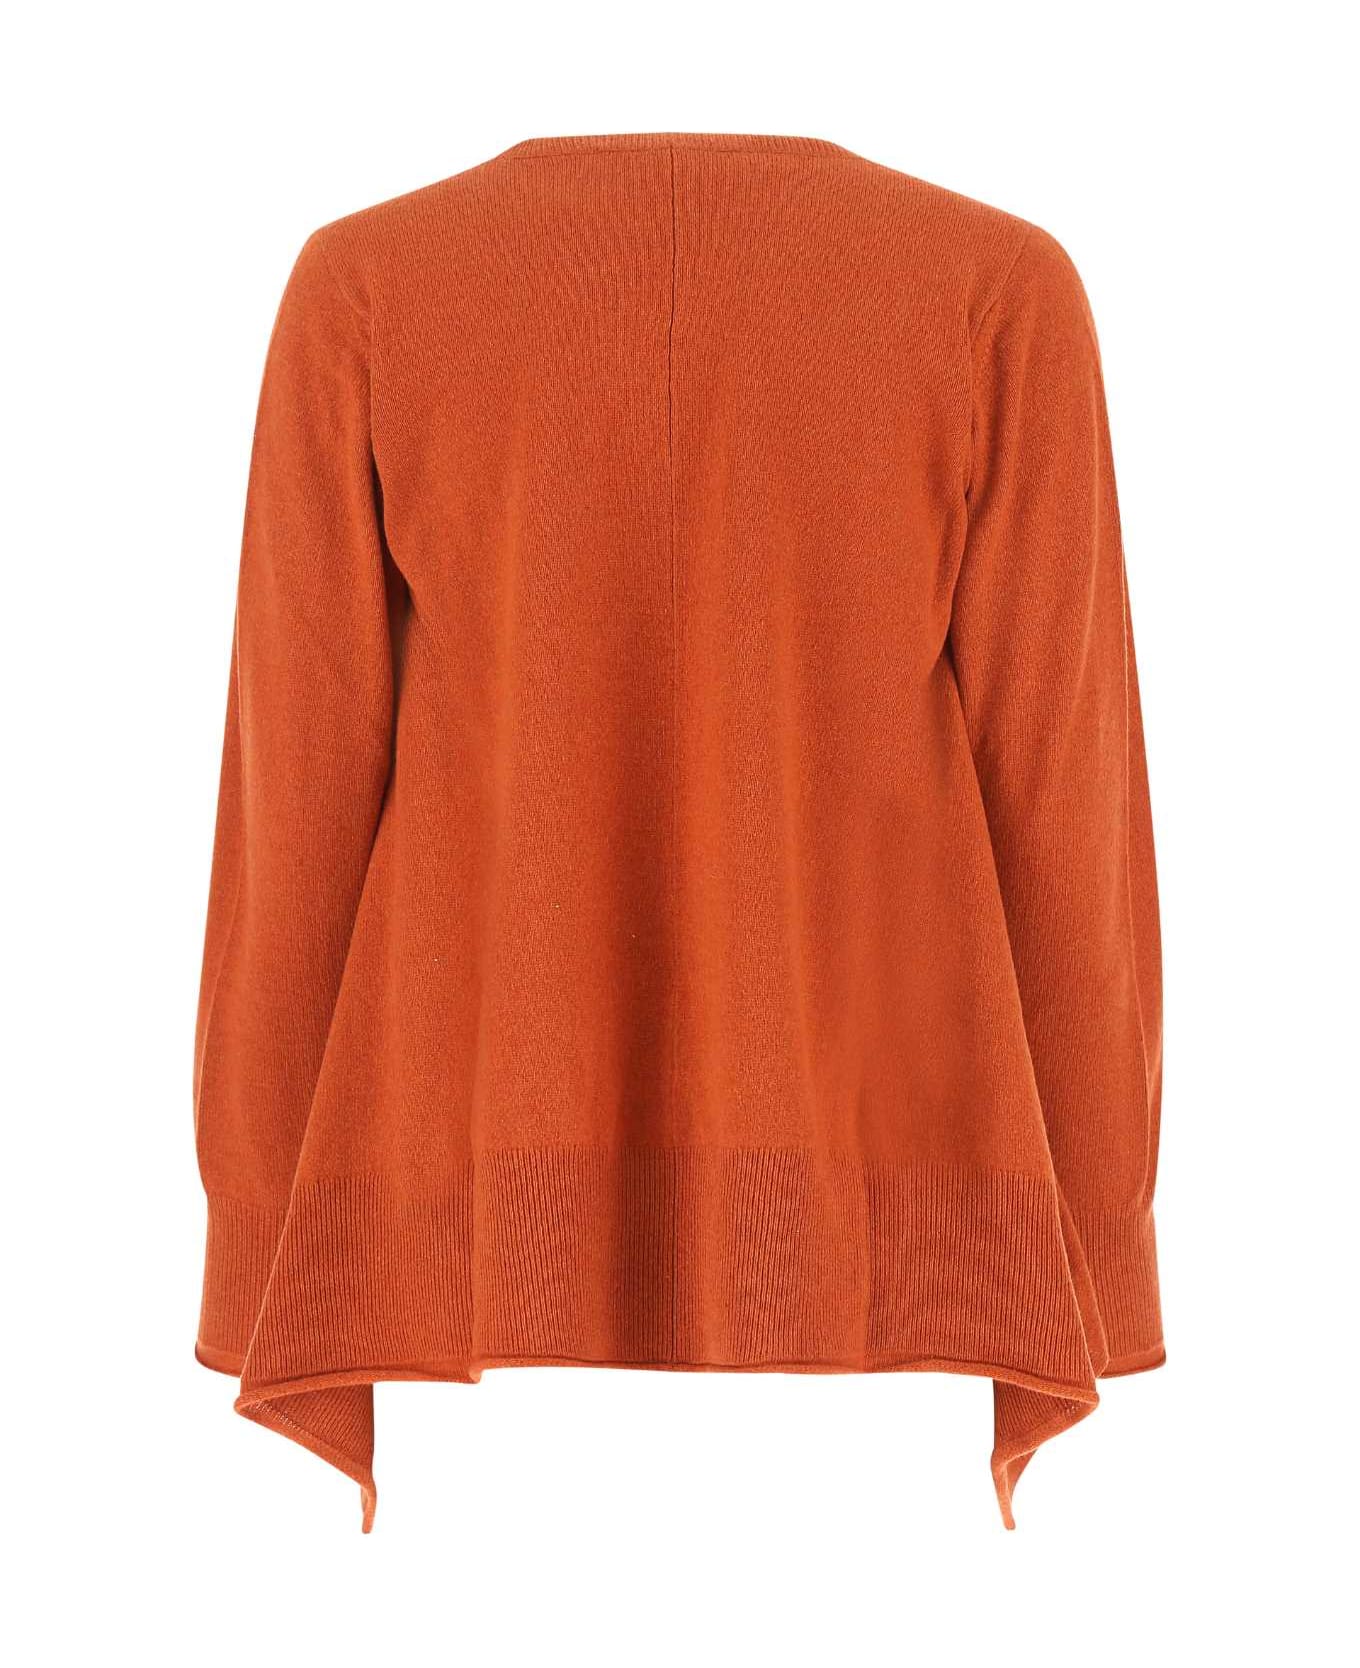 Stella McCartney Copper Cashmere Blend Oversize Sweater - 6302